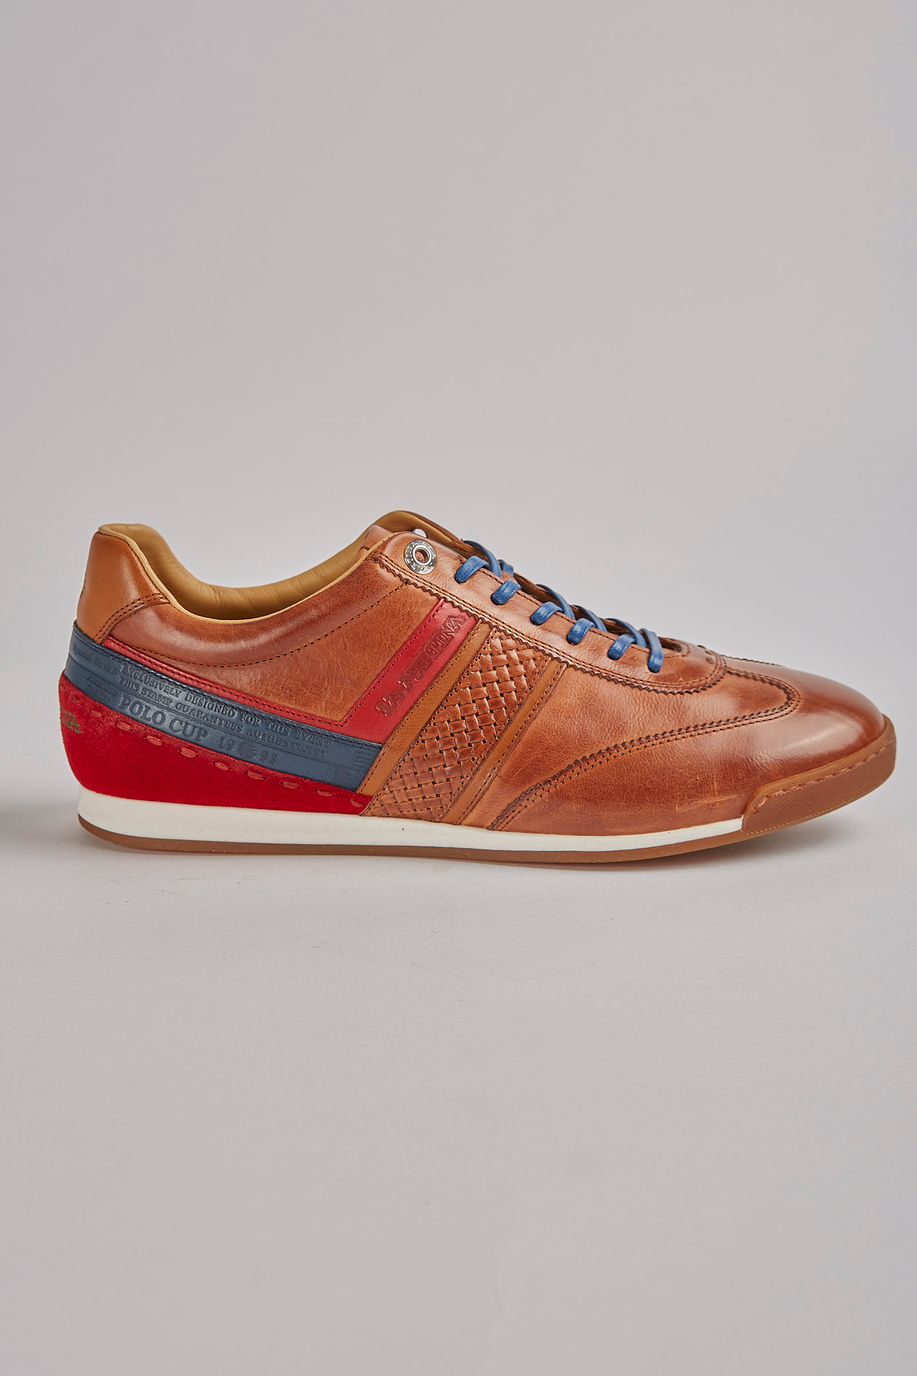 Sneaker in misto pelle - Scarpe Formali | La Martina - Official Online Shop